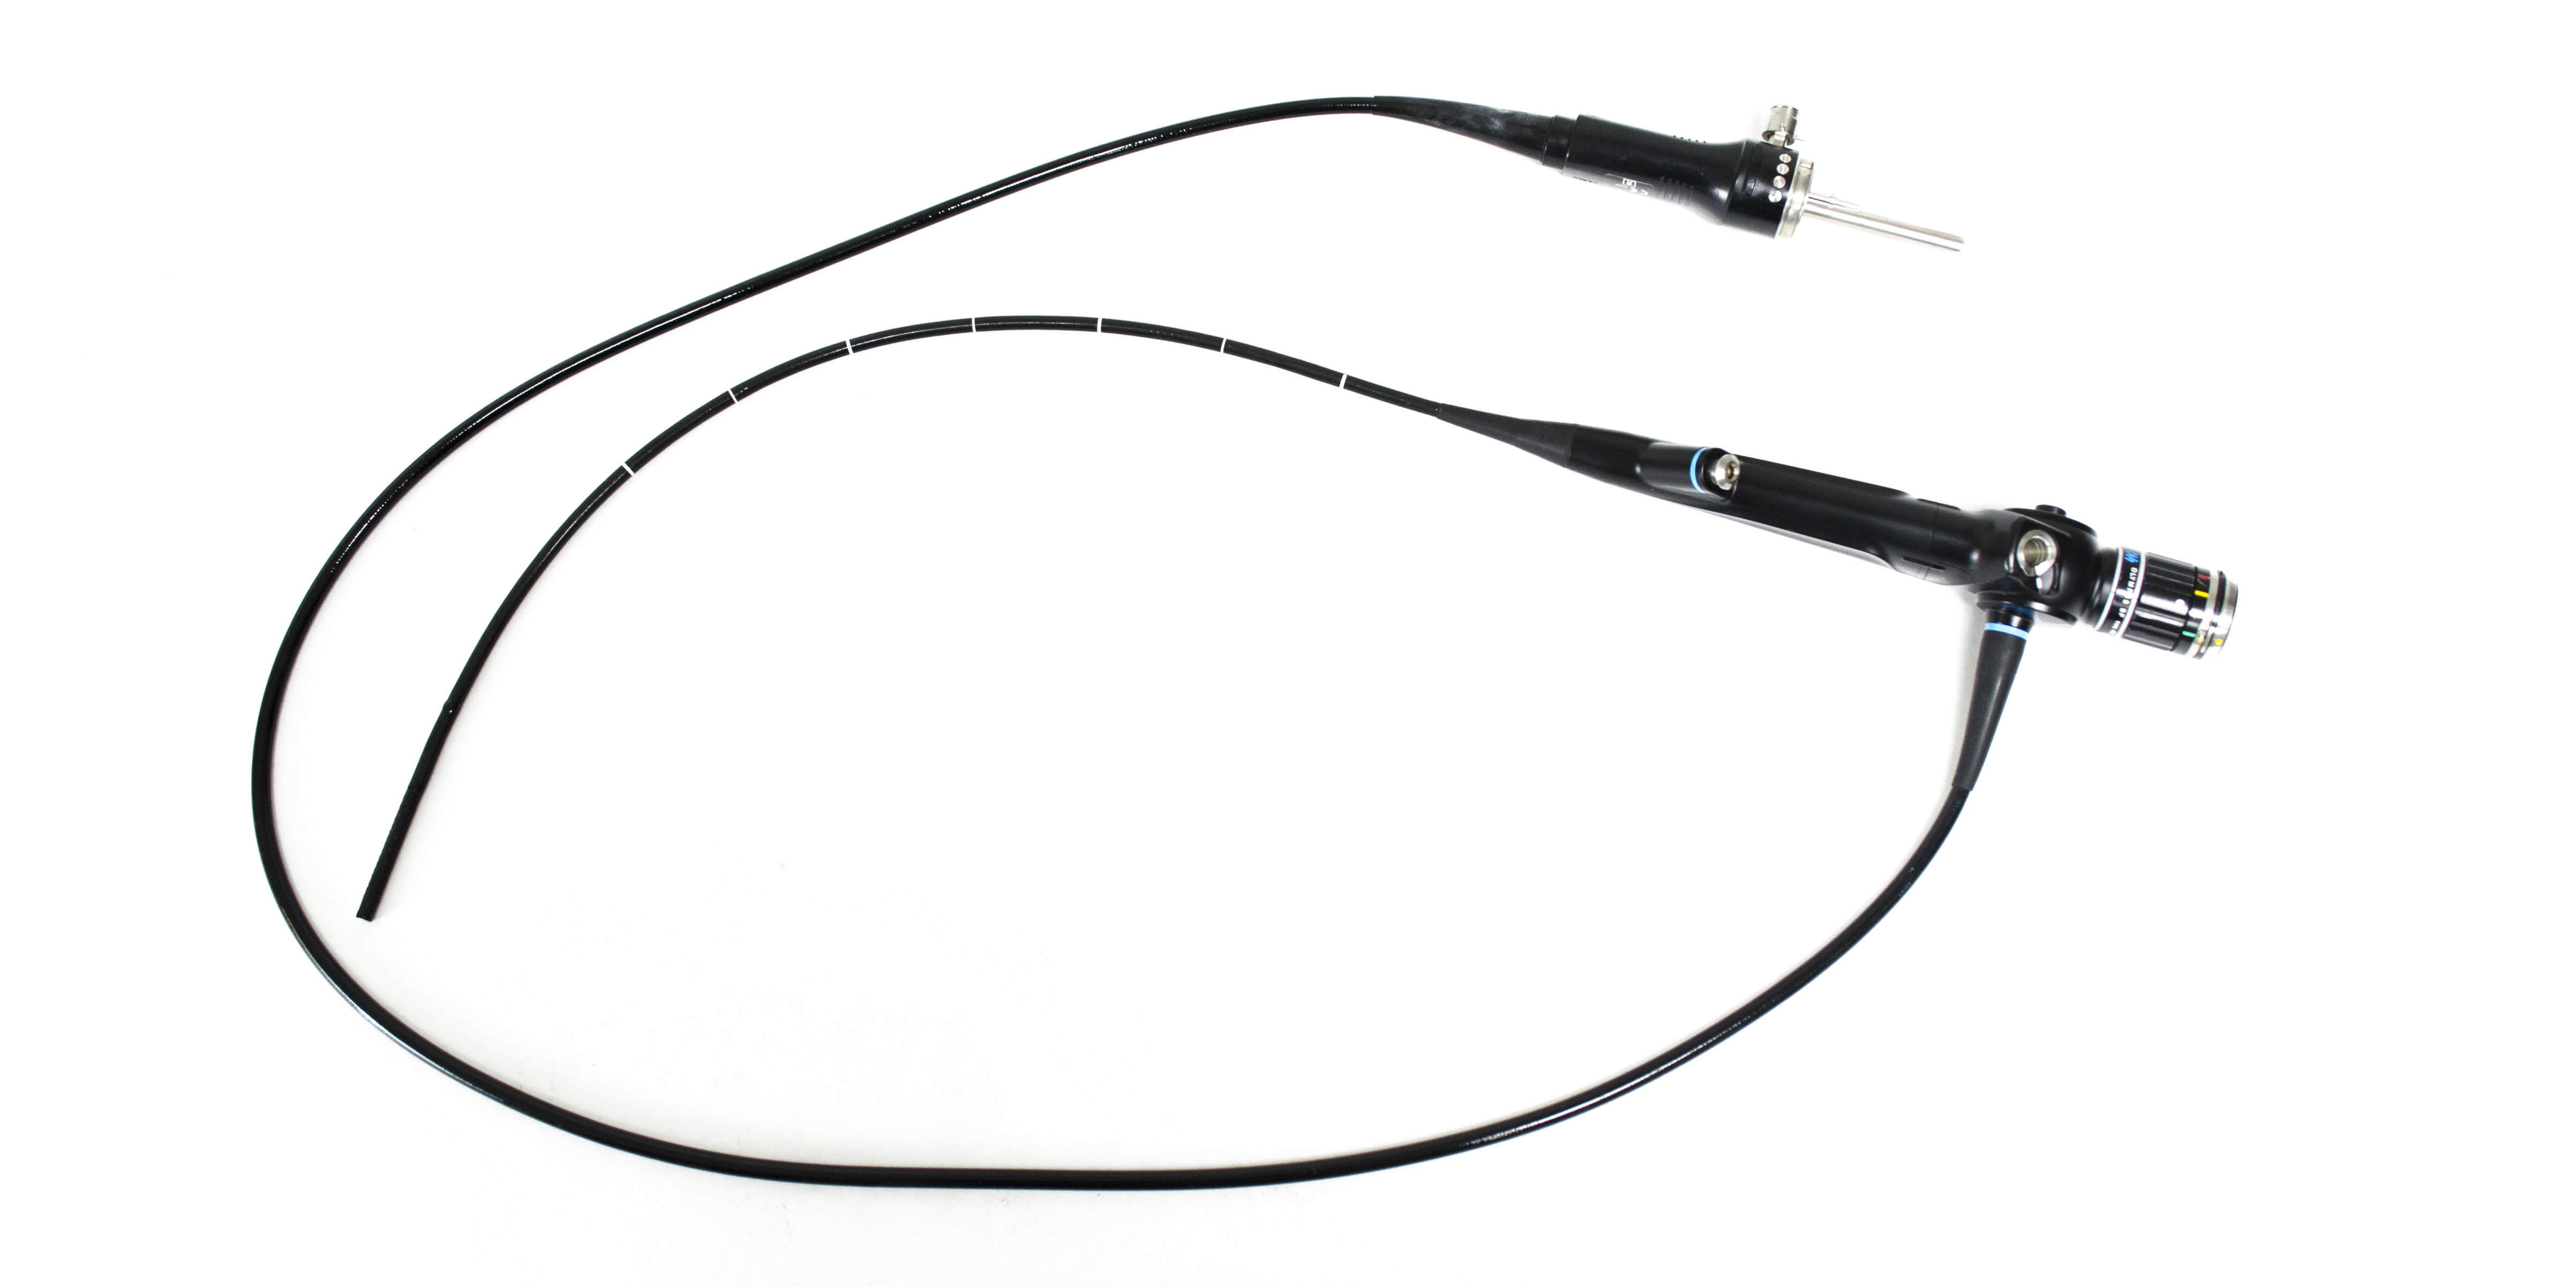 Olympus BF-40 Bronchoscope Flexible Fiber Endoscope (Part Scope)